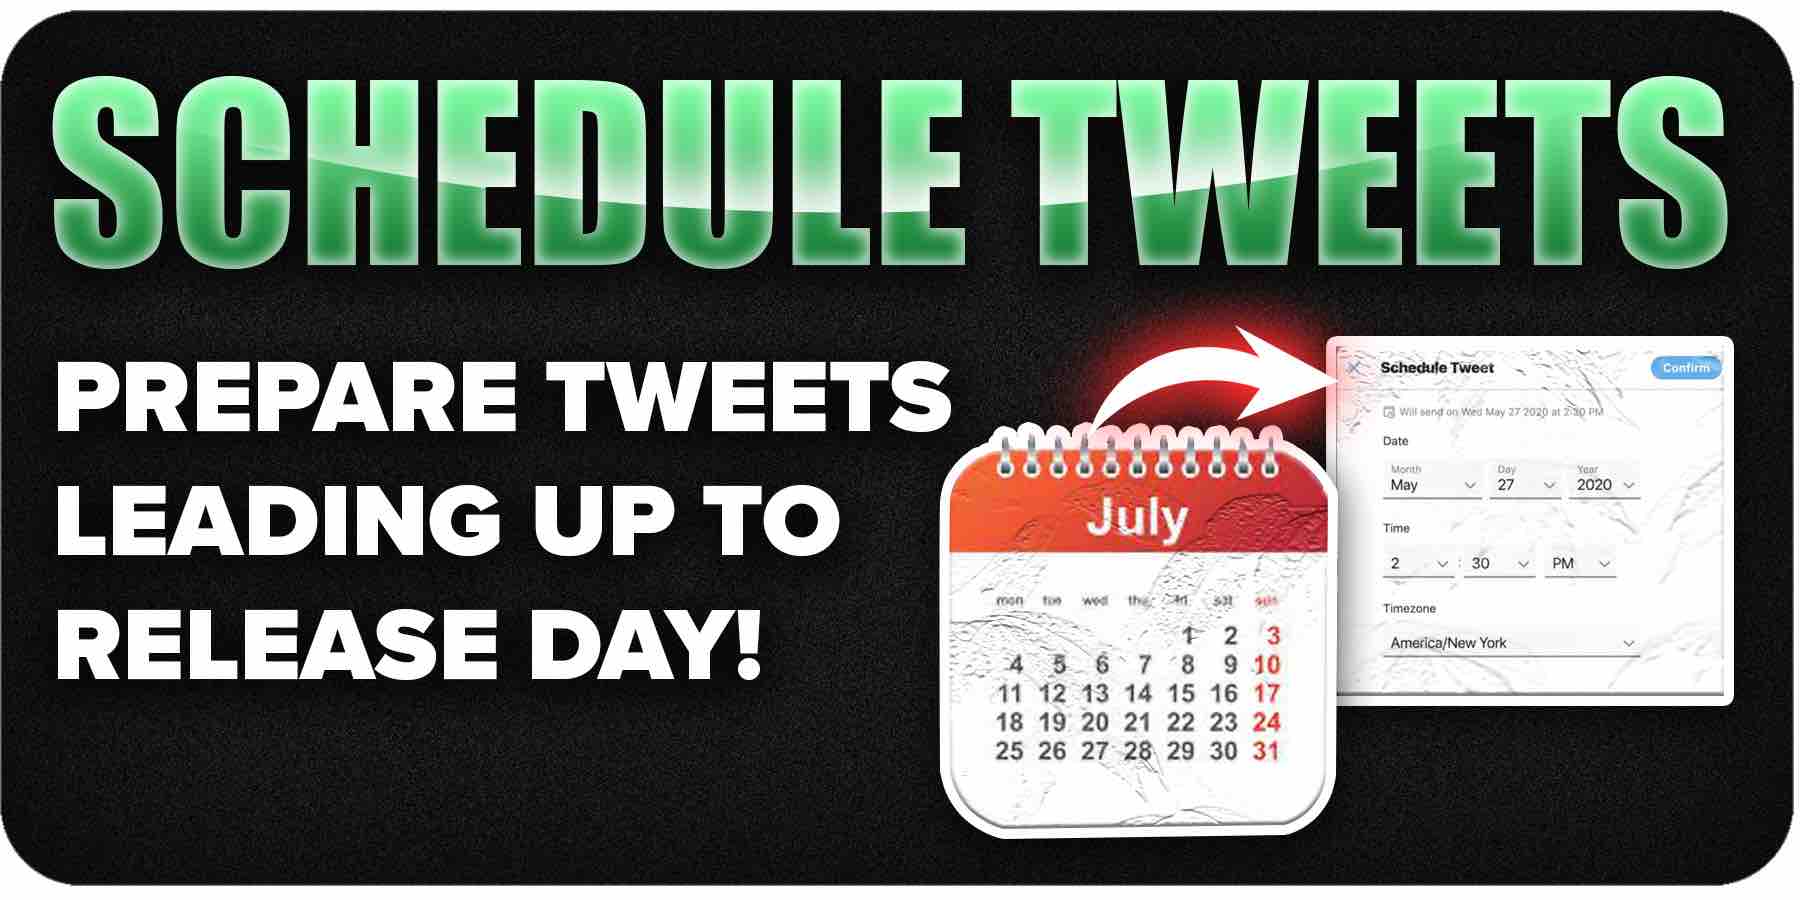 Schedule Tweets in advance on Twitter